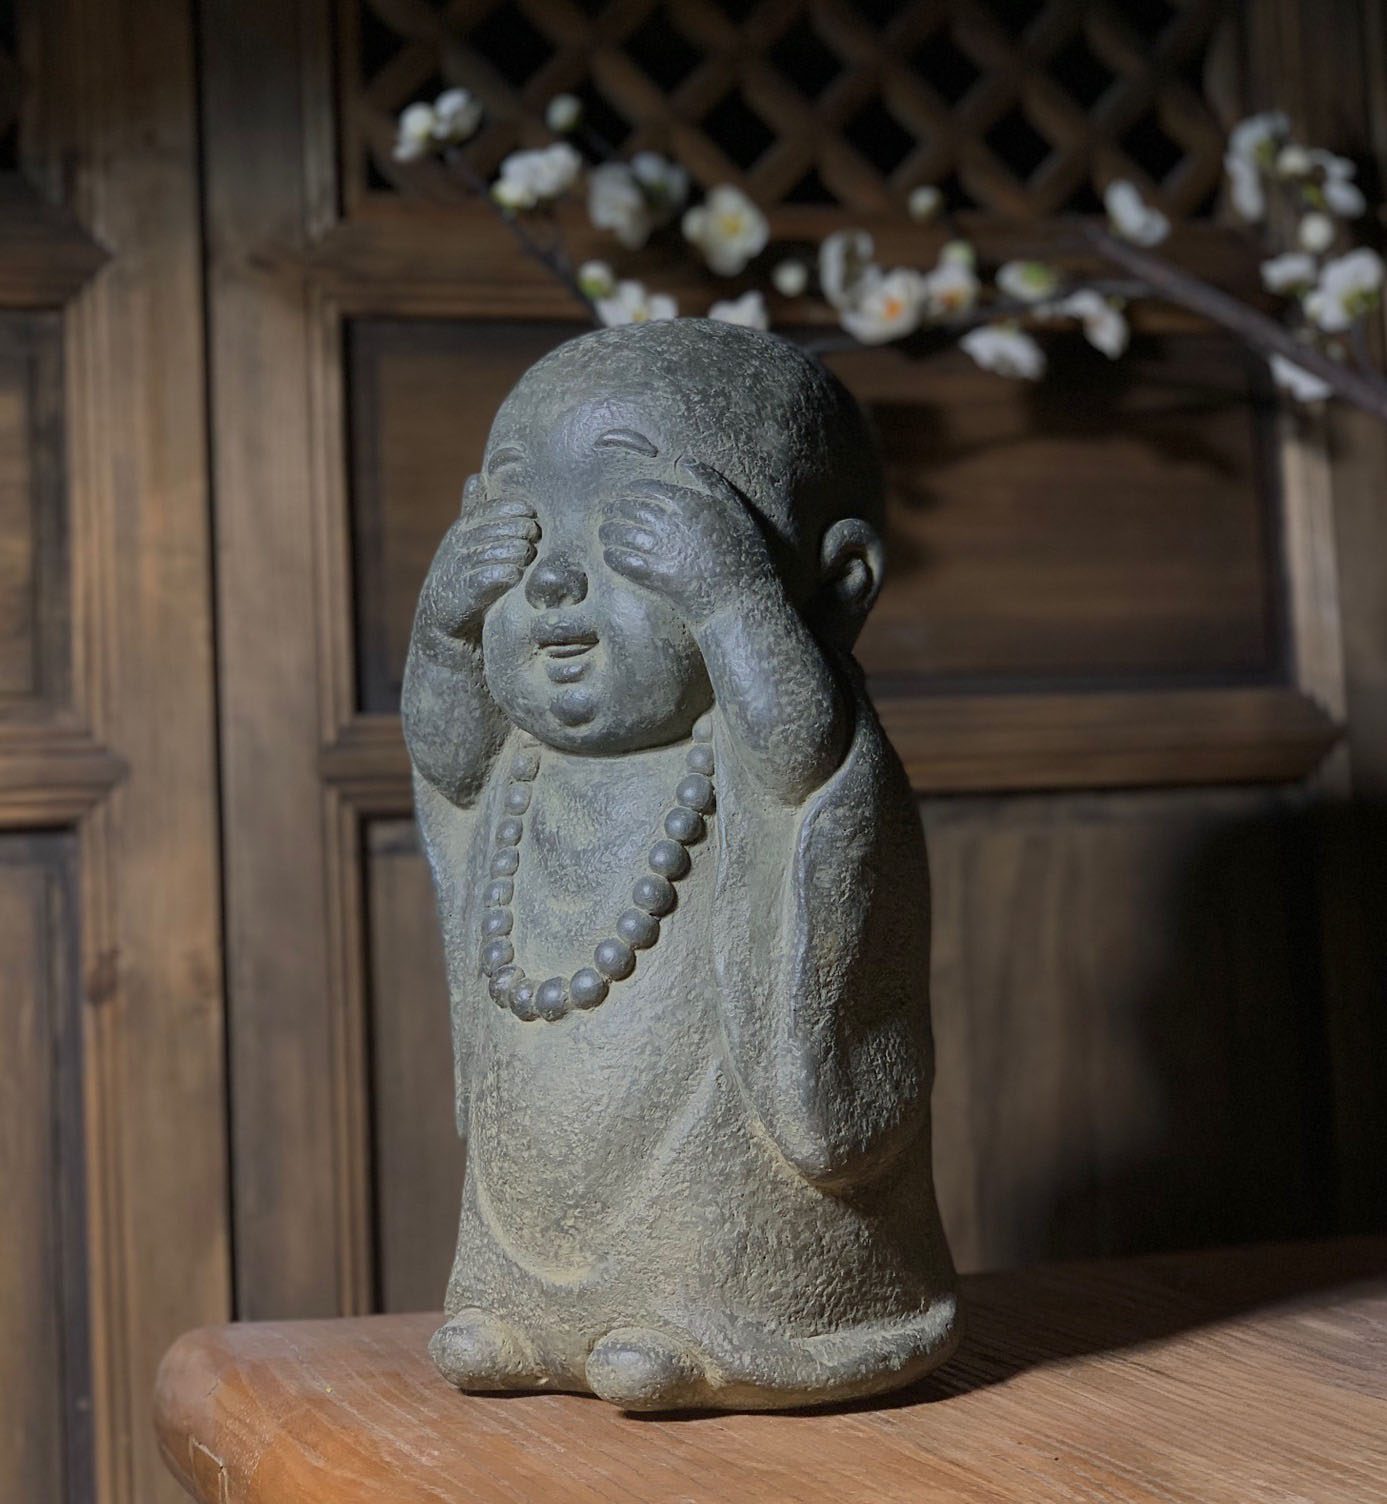 Little Novice Monk Handcraft, Stone Carving Art, Home Interior Design